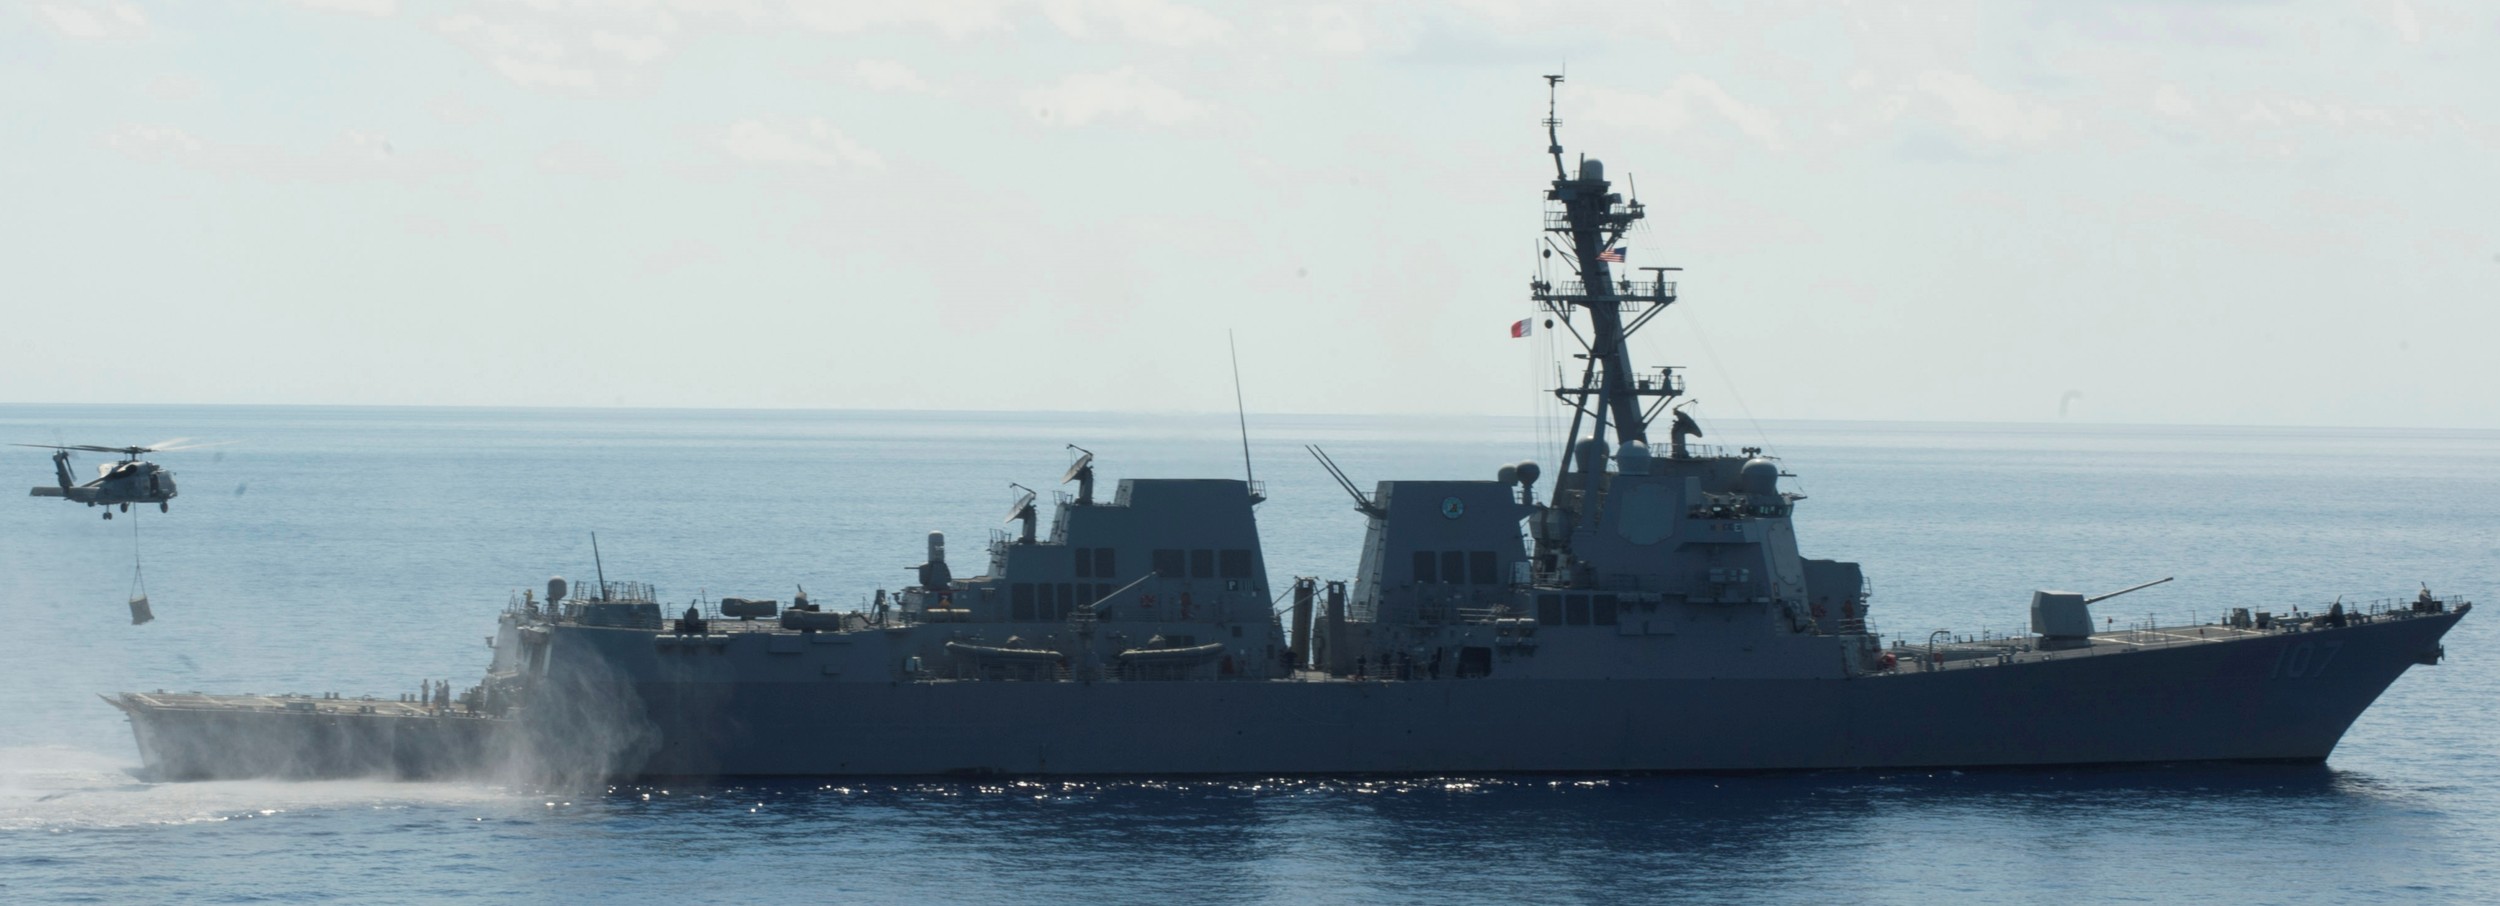 ddg-107 uss gravely arleigh burke class guided missile destroyer aegis us navy 21p